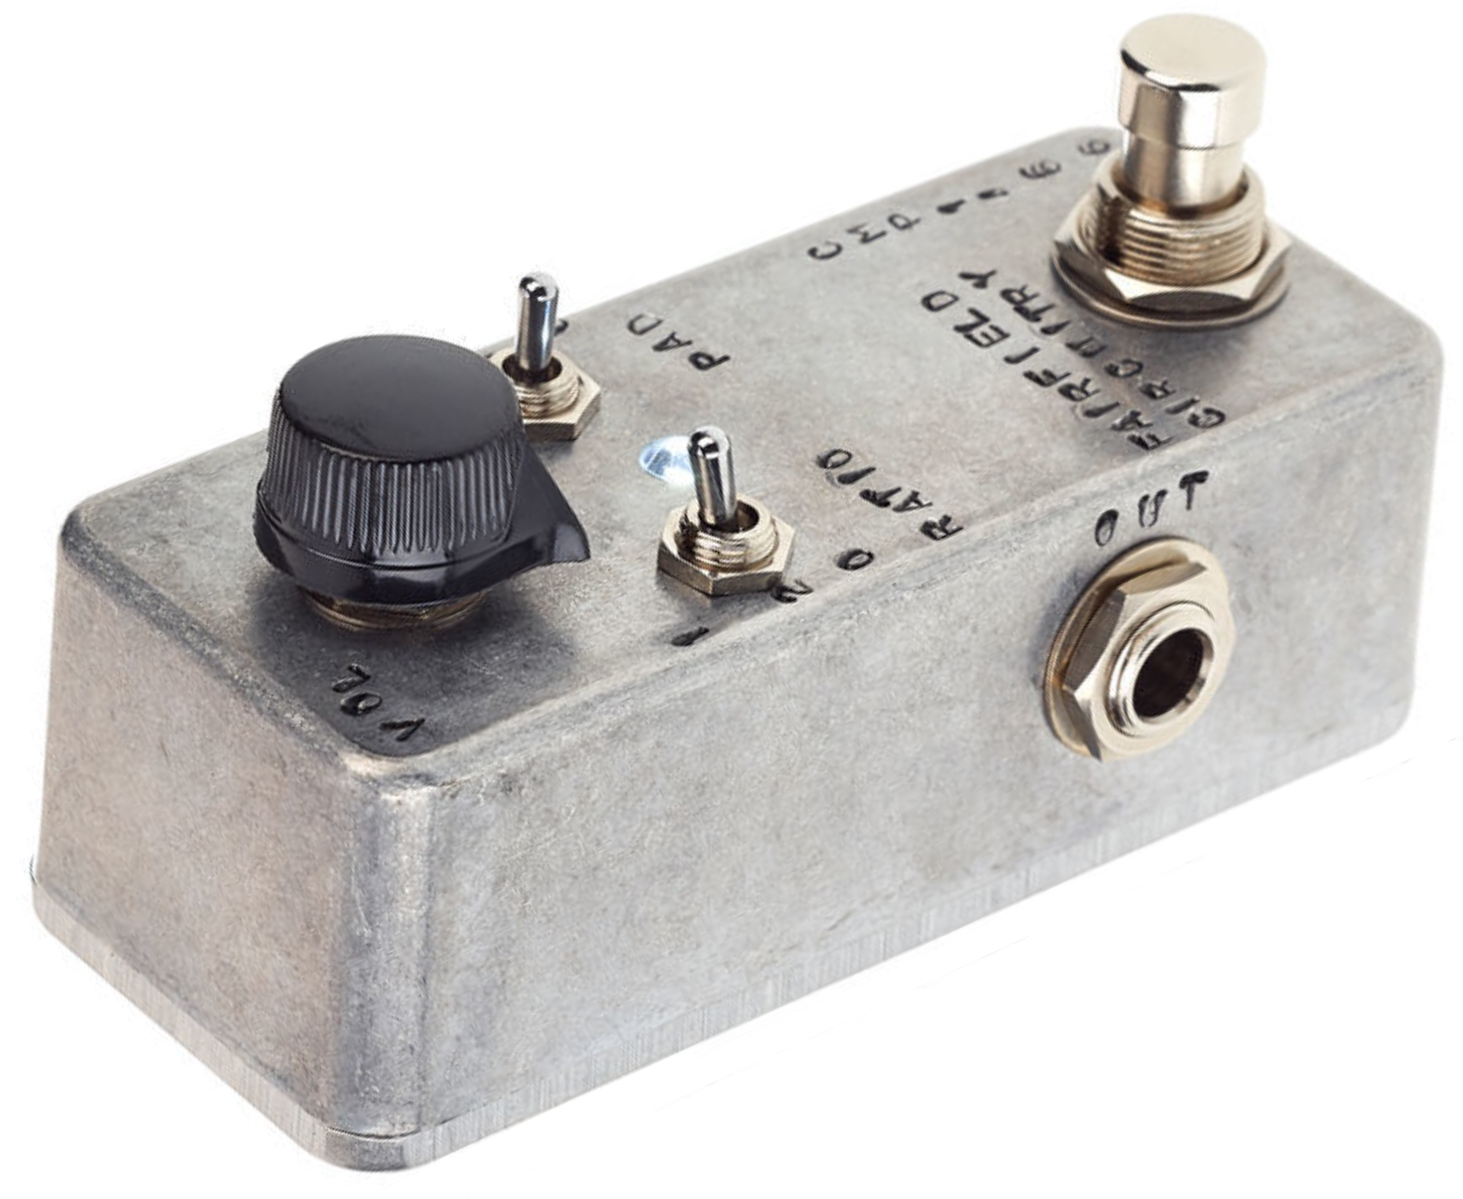 Fairfield Circuitry The Accountant Compressor - Kompressor/Sustain/Noise gate Effektpedal - Variation 2